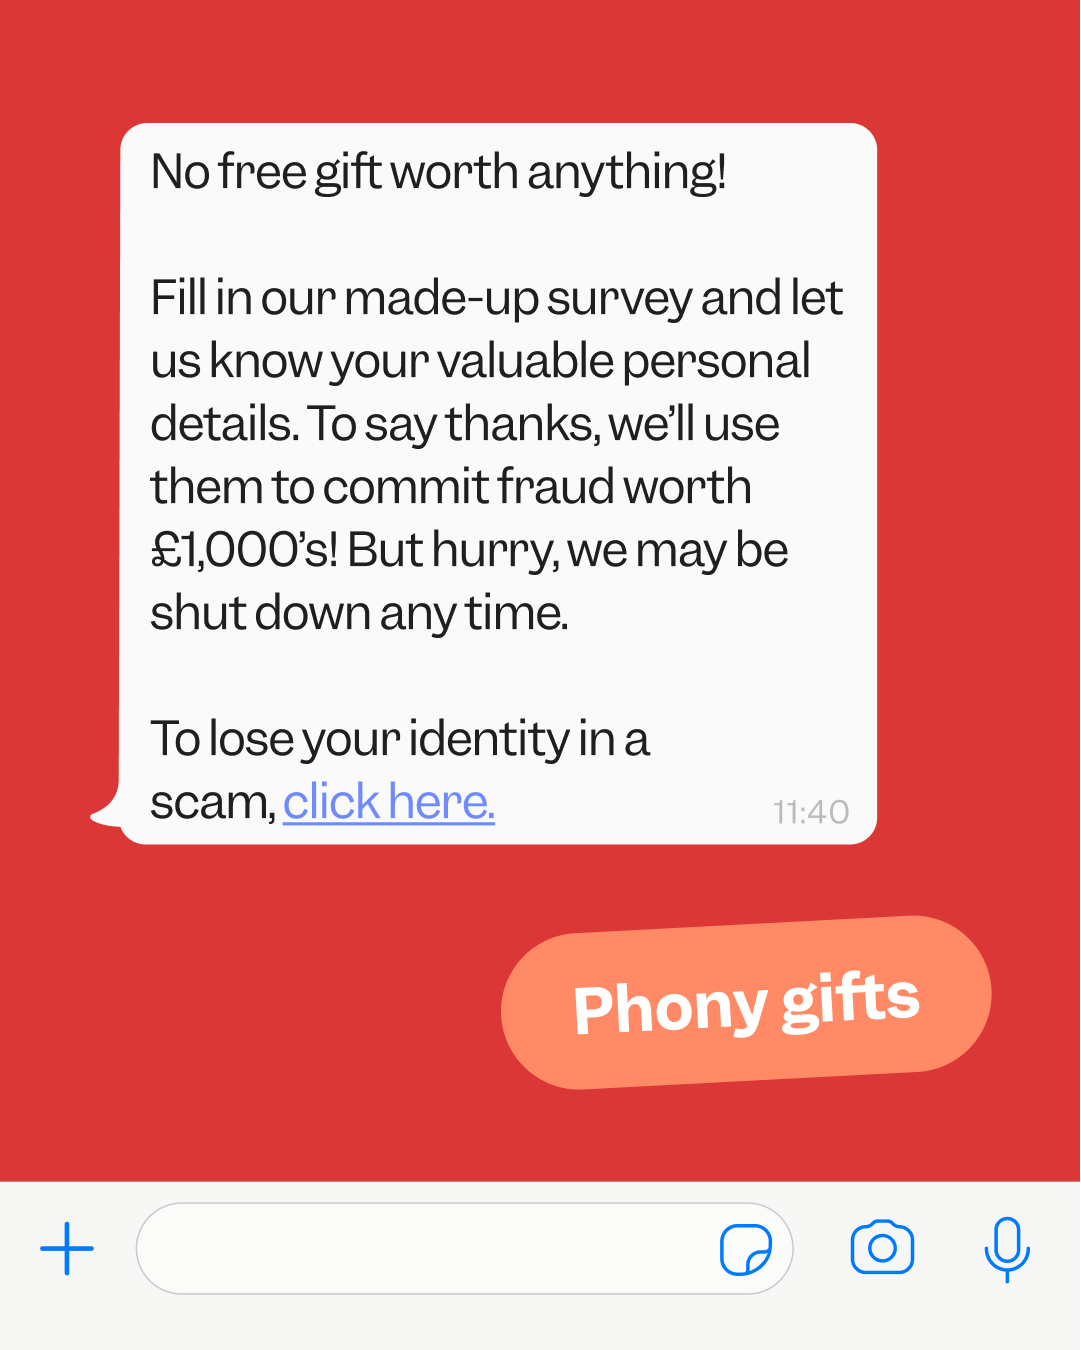 WhatsApp Free Gift Scam